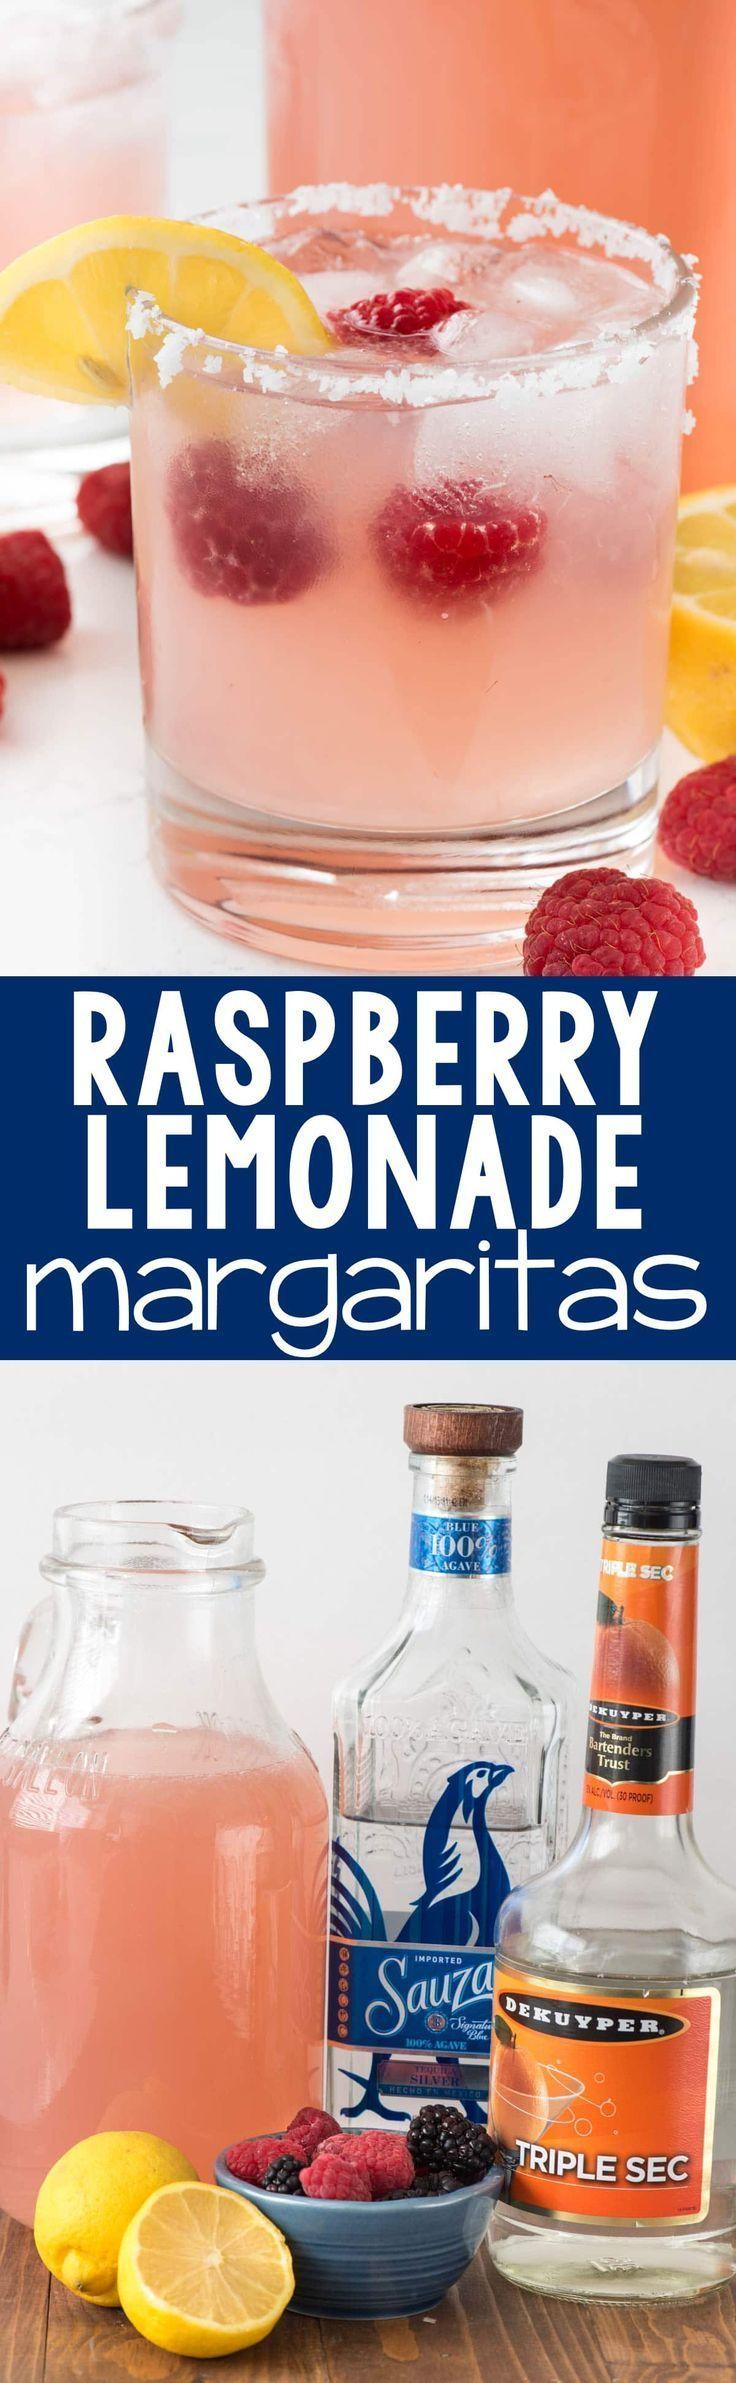 Wedding - Raspberry Lemonade Margaritas